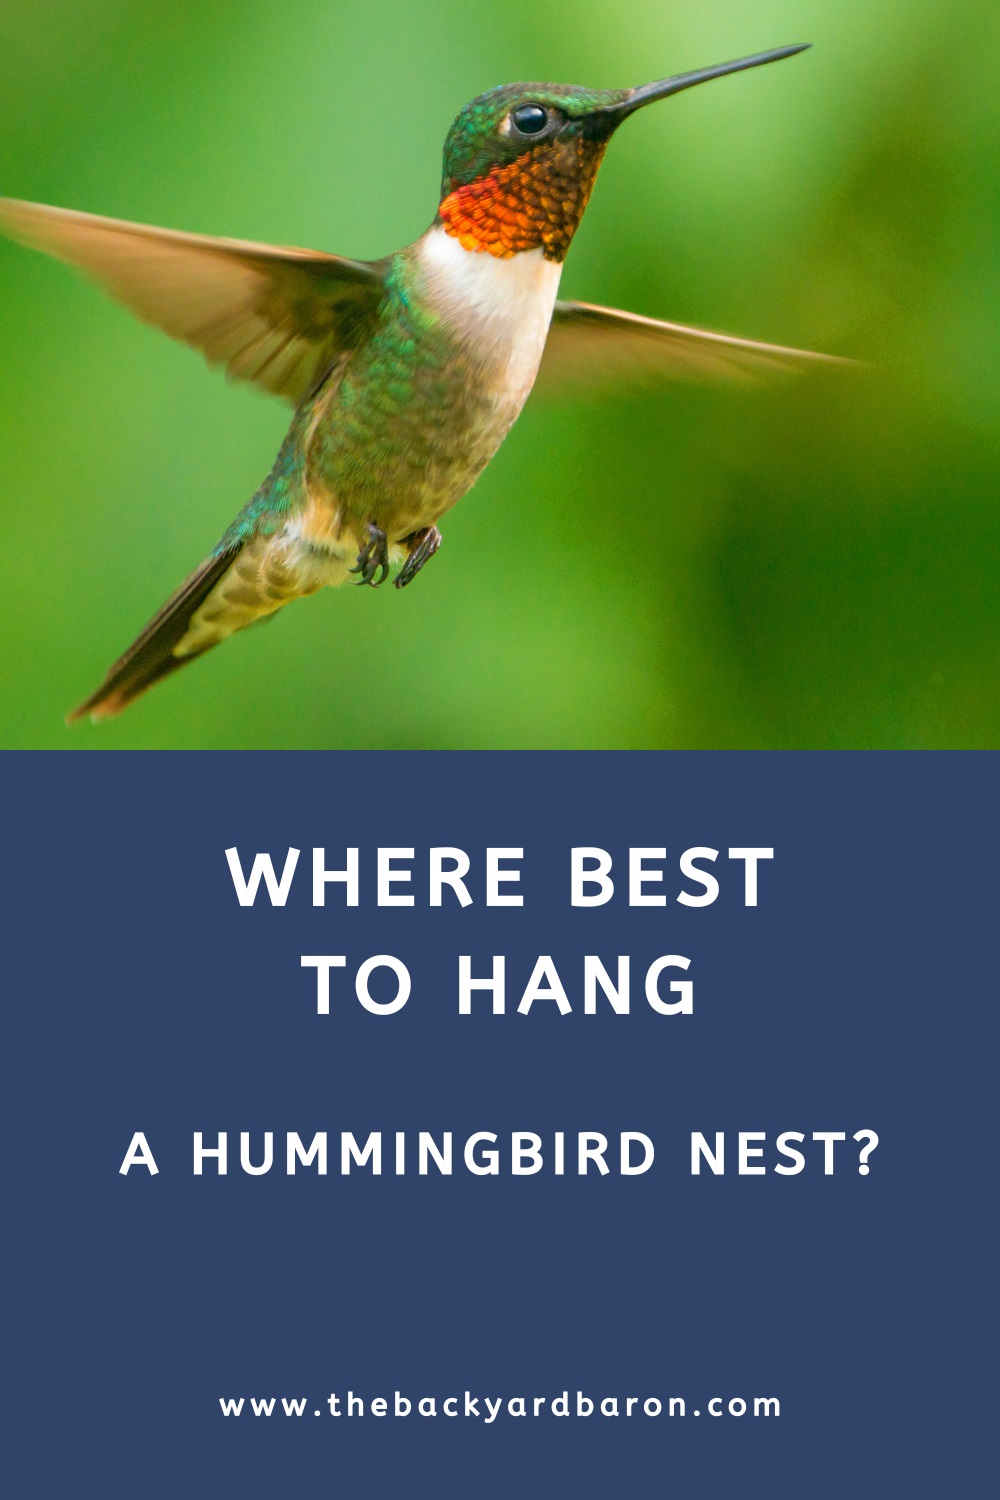 Hummingbird nests in the yard